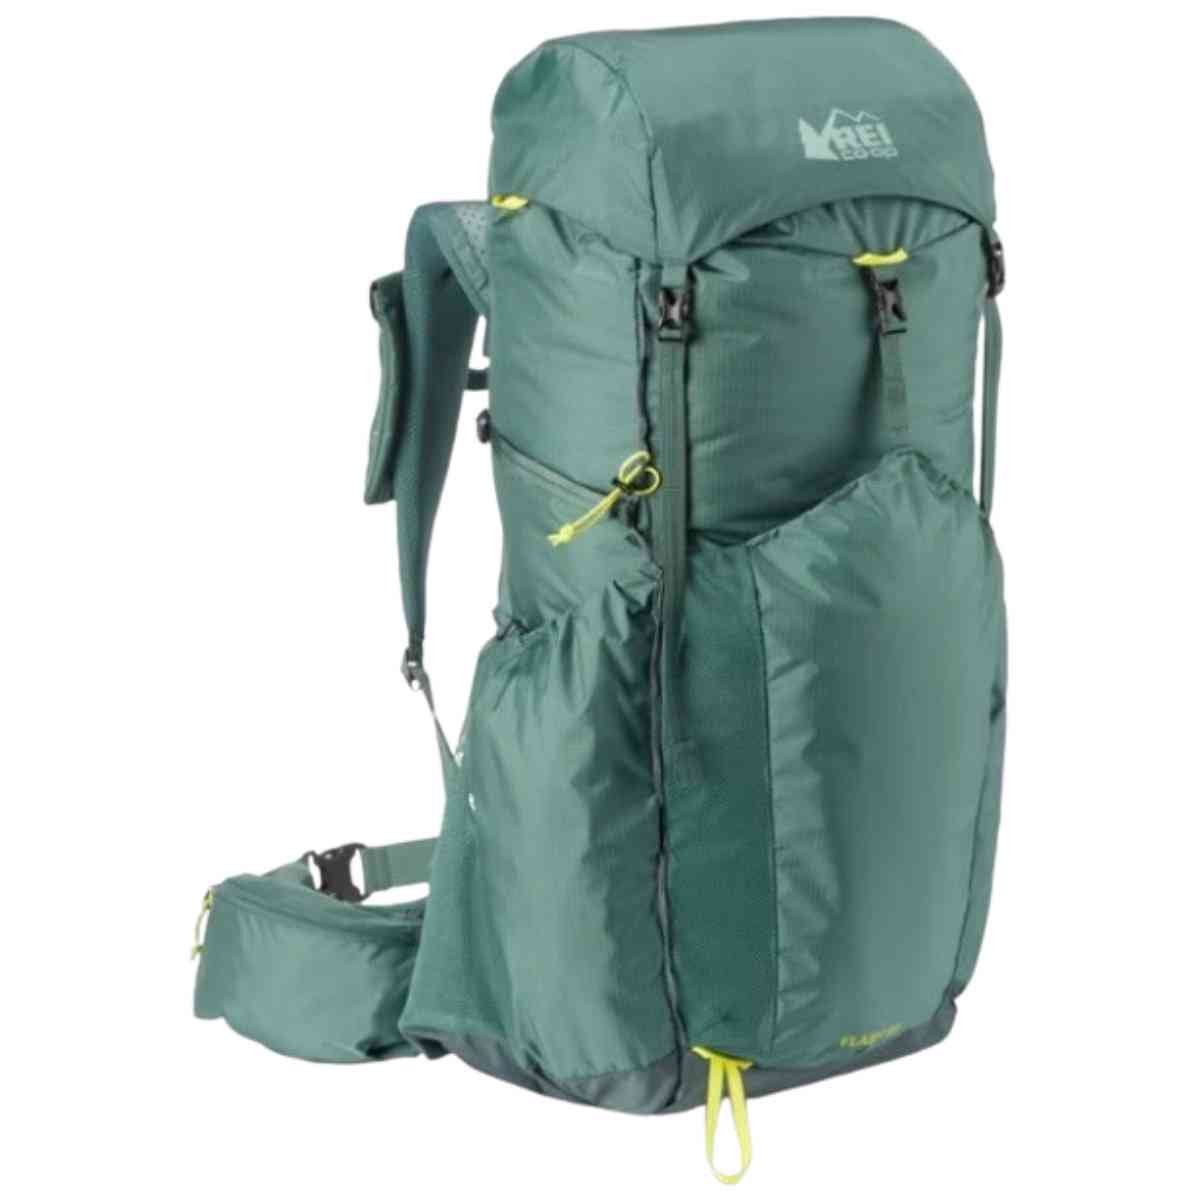 40 Liter Ultralight Hiking Backpacks: Comparison Table - Exploring